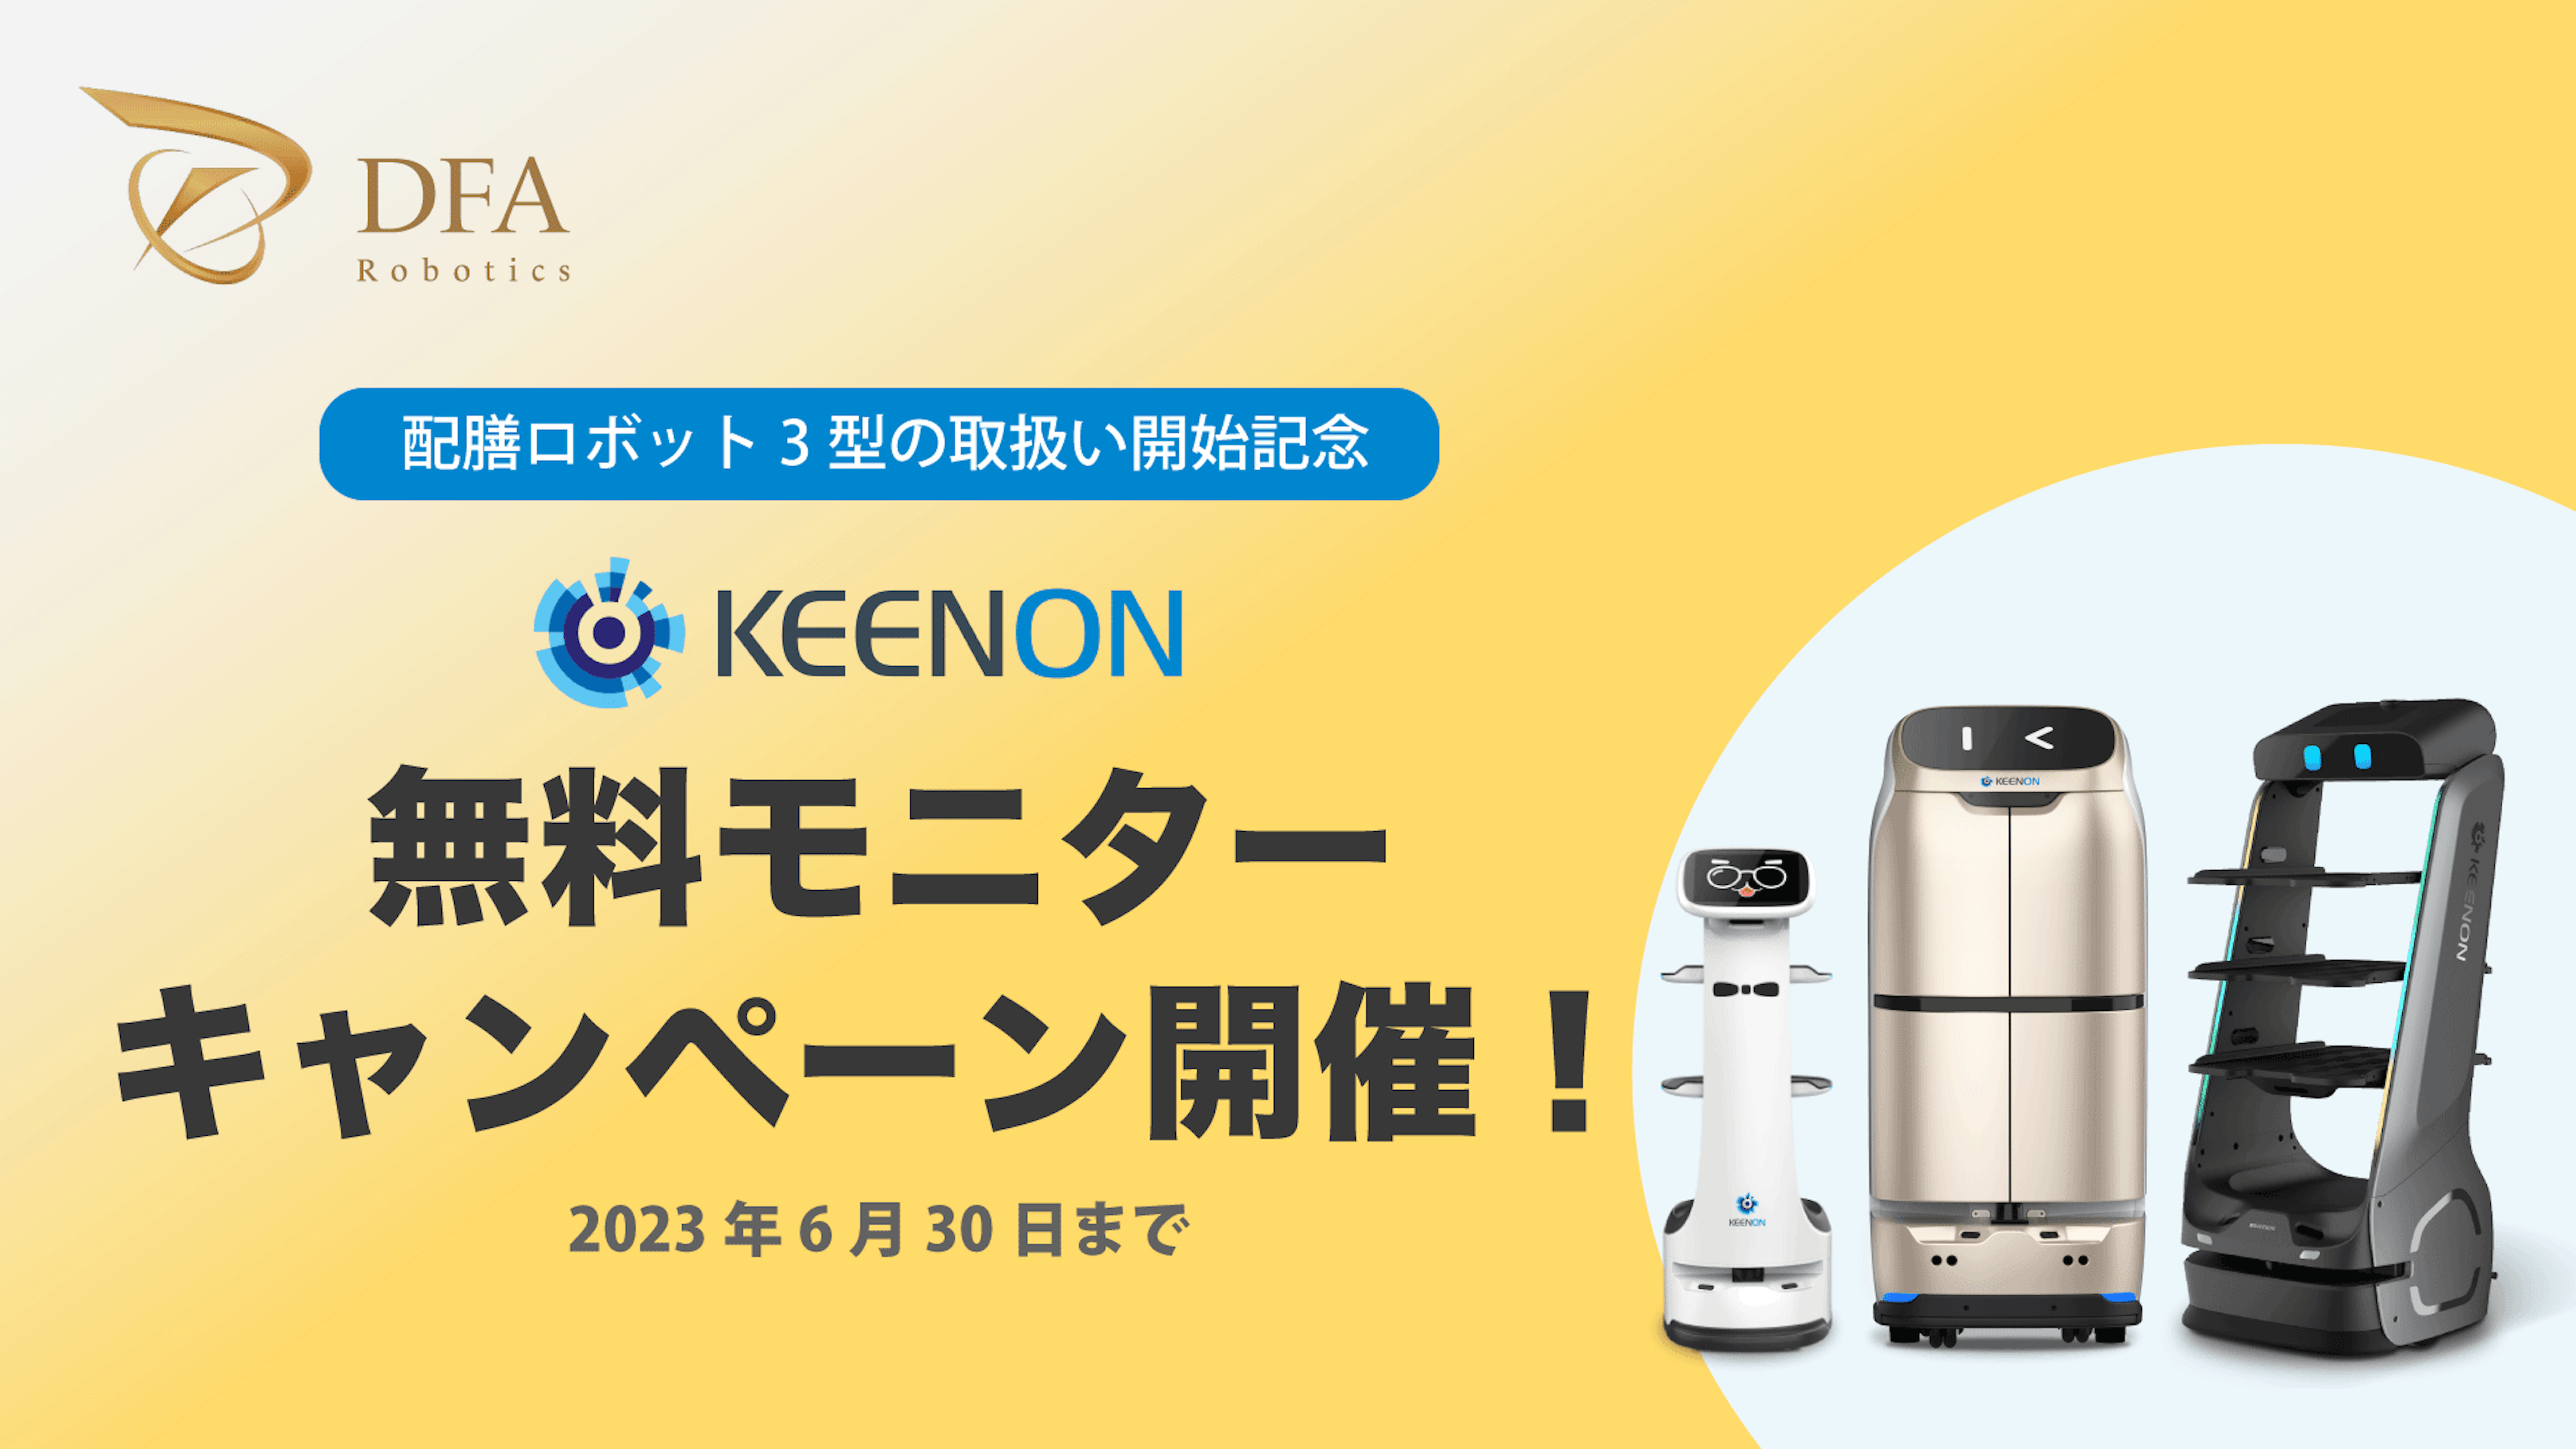 DFA Roboticsが、KEENON Robotics社製配膳ロボット3型の取扱いを開始
取扱いを記念し、サービスロボット導入を検討中の企業様向けに導入無料モニターキャンペーンを開催